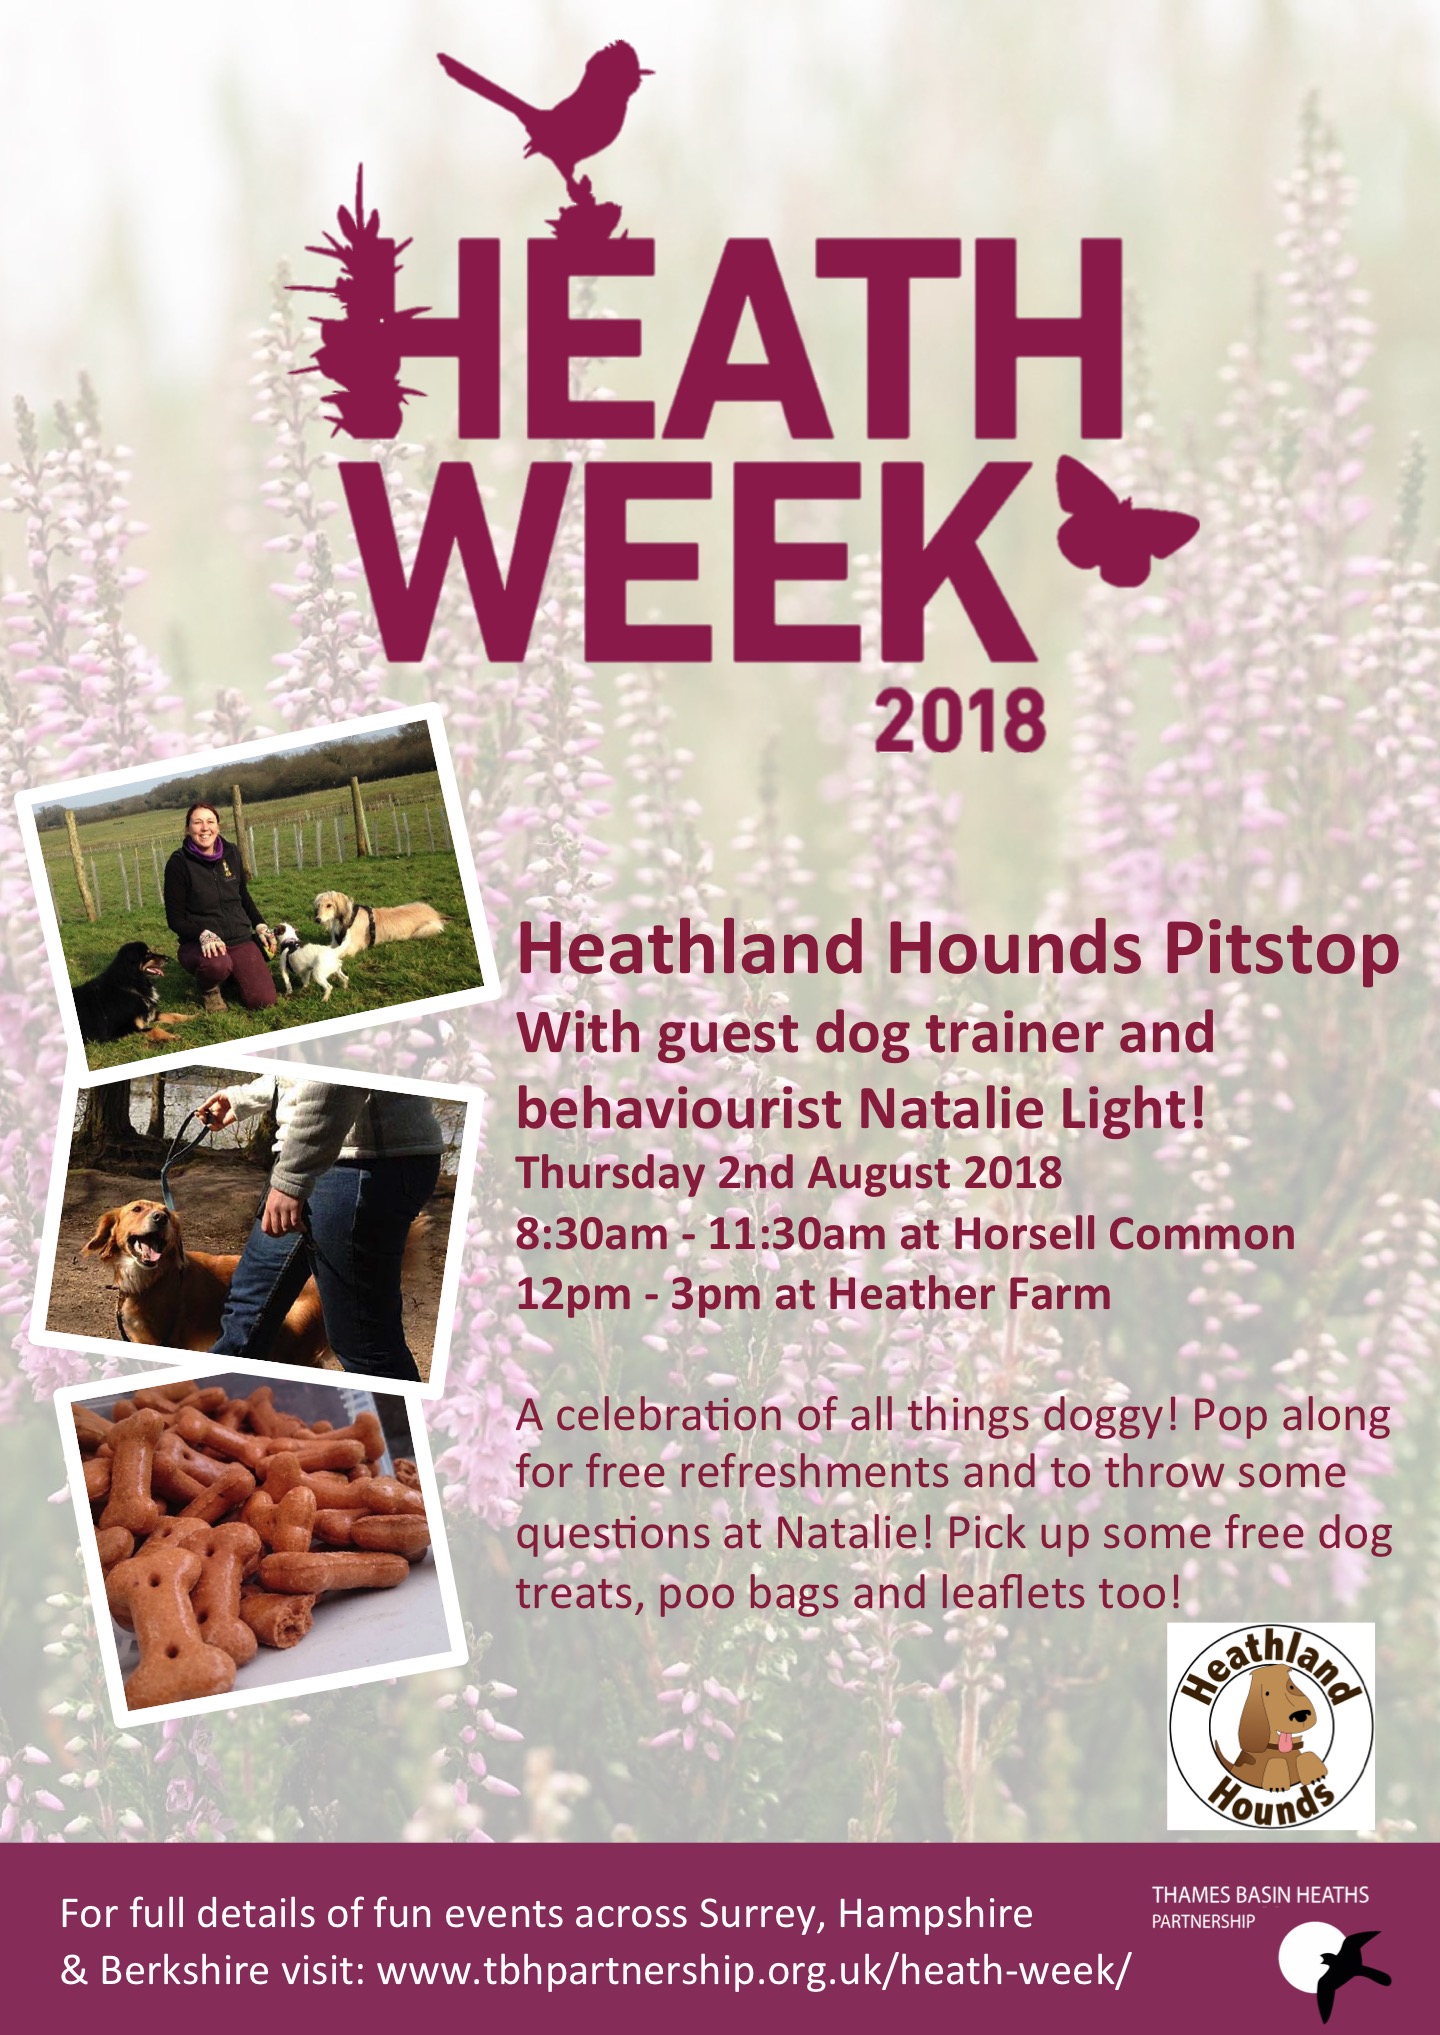 Heath Week poster for Heathland Hounds event